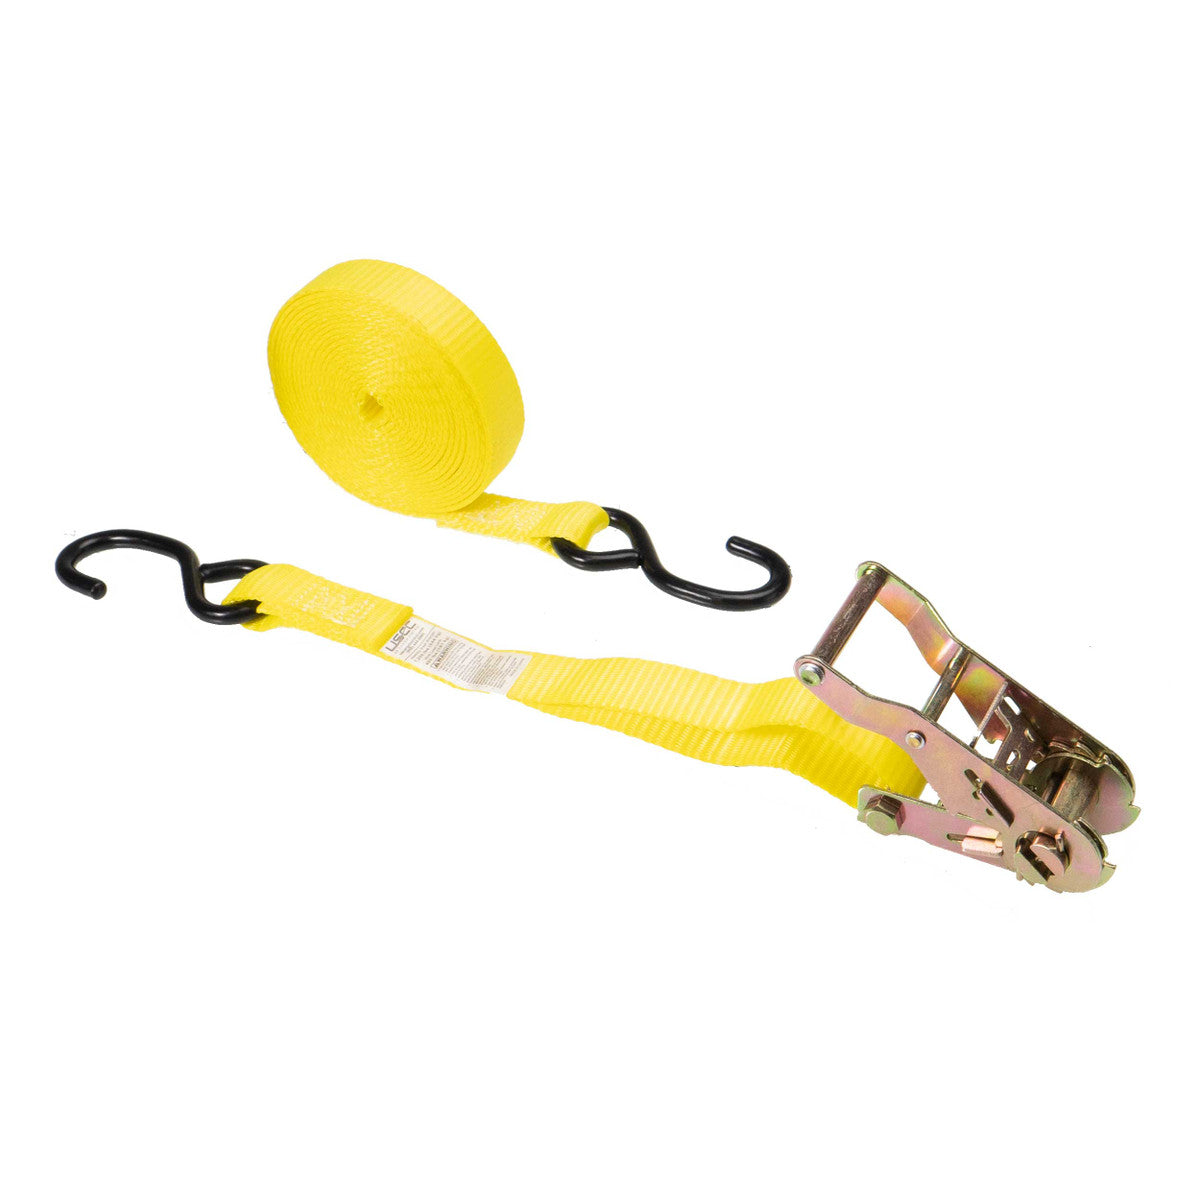 1 x 15' Cambuckle Strap with Safety Latch S-Hooks — Ratchet Straps USA